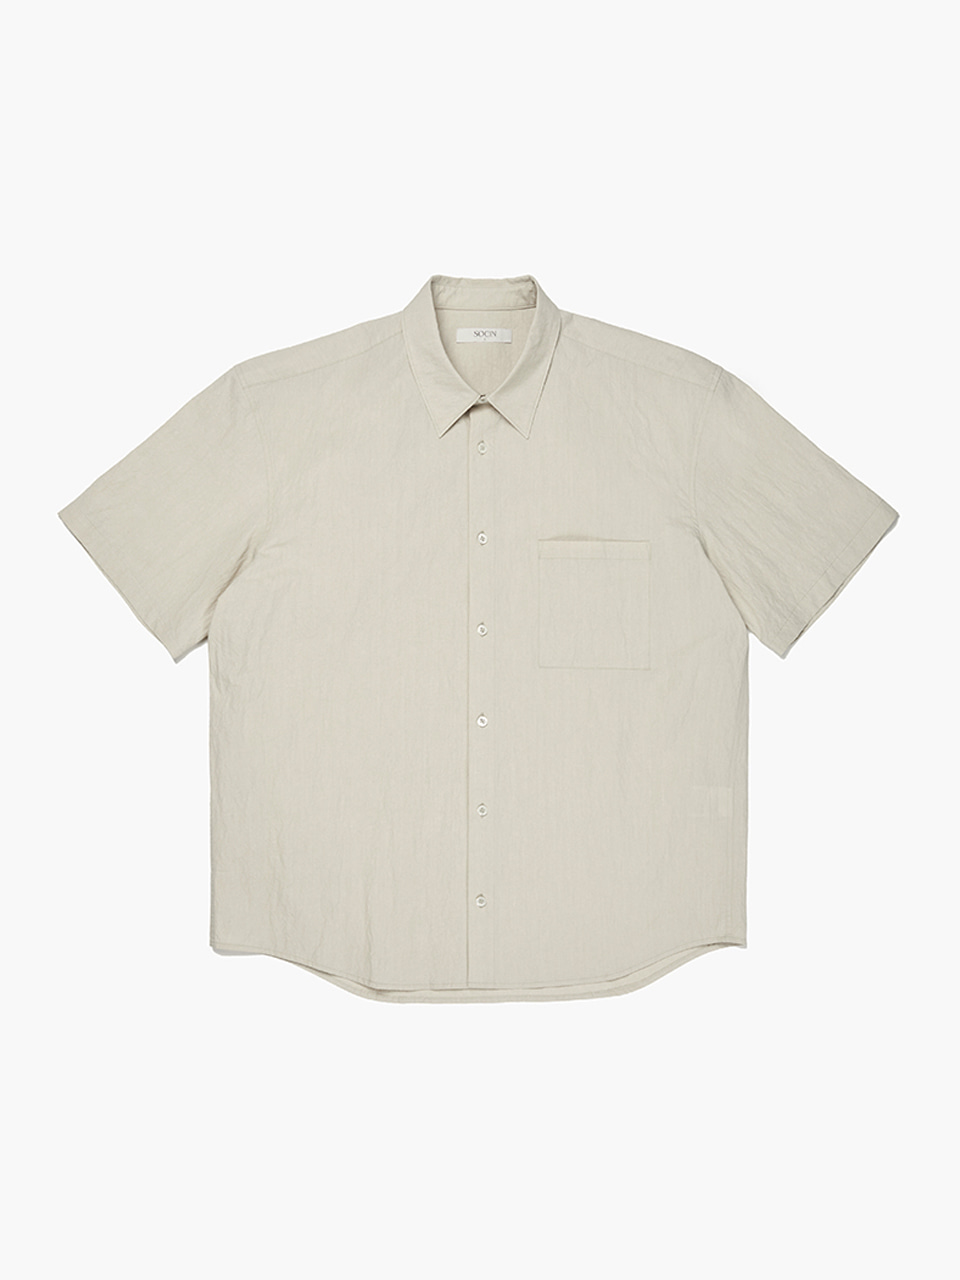 Crease Cotton Half Shirts (Ivory)